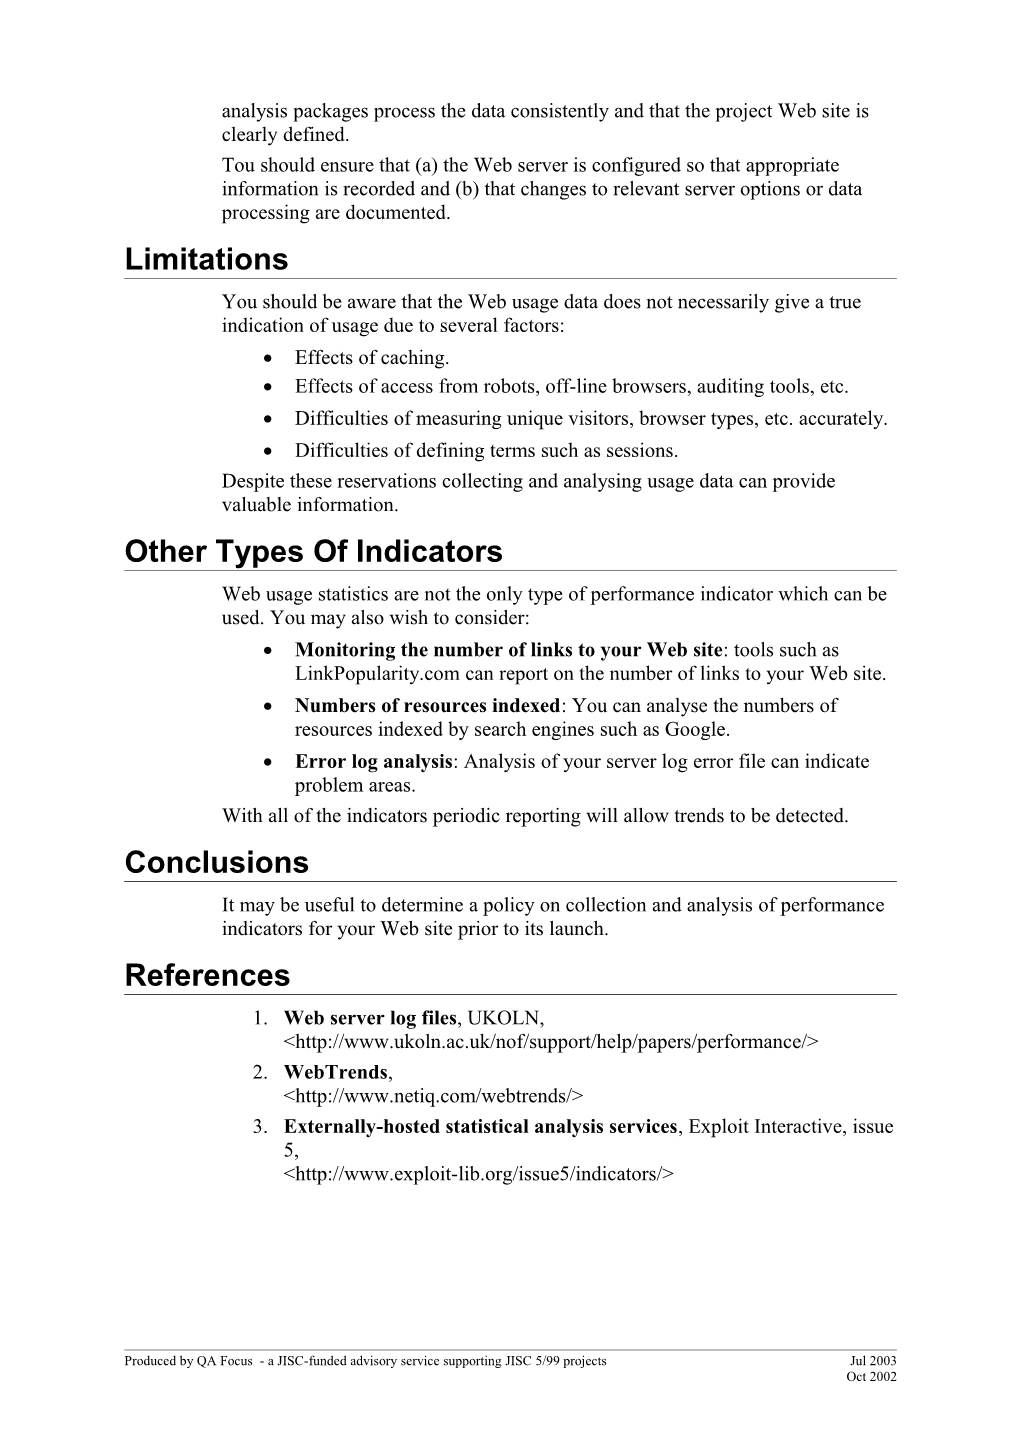 A QA Focus Document